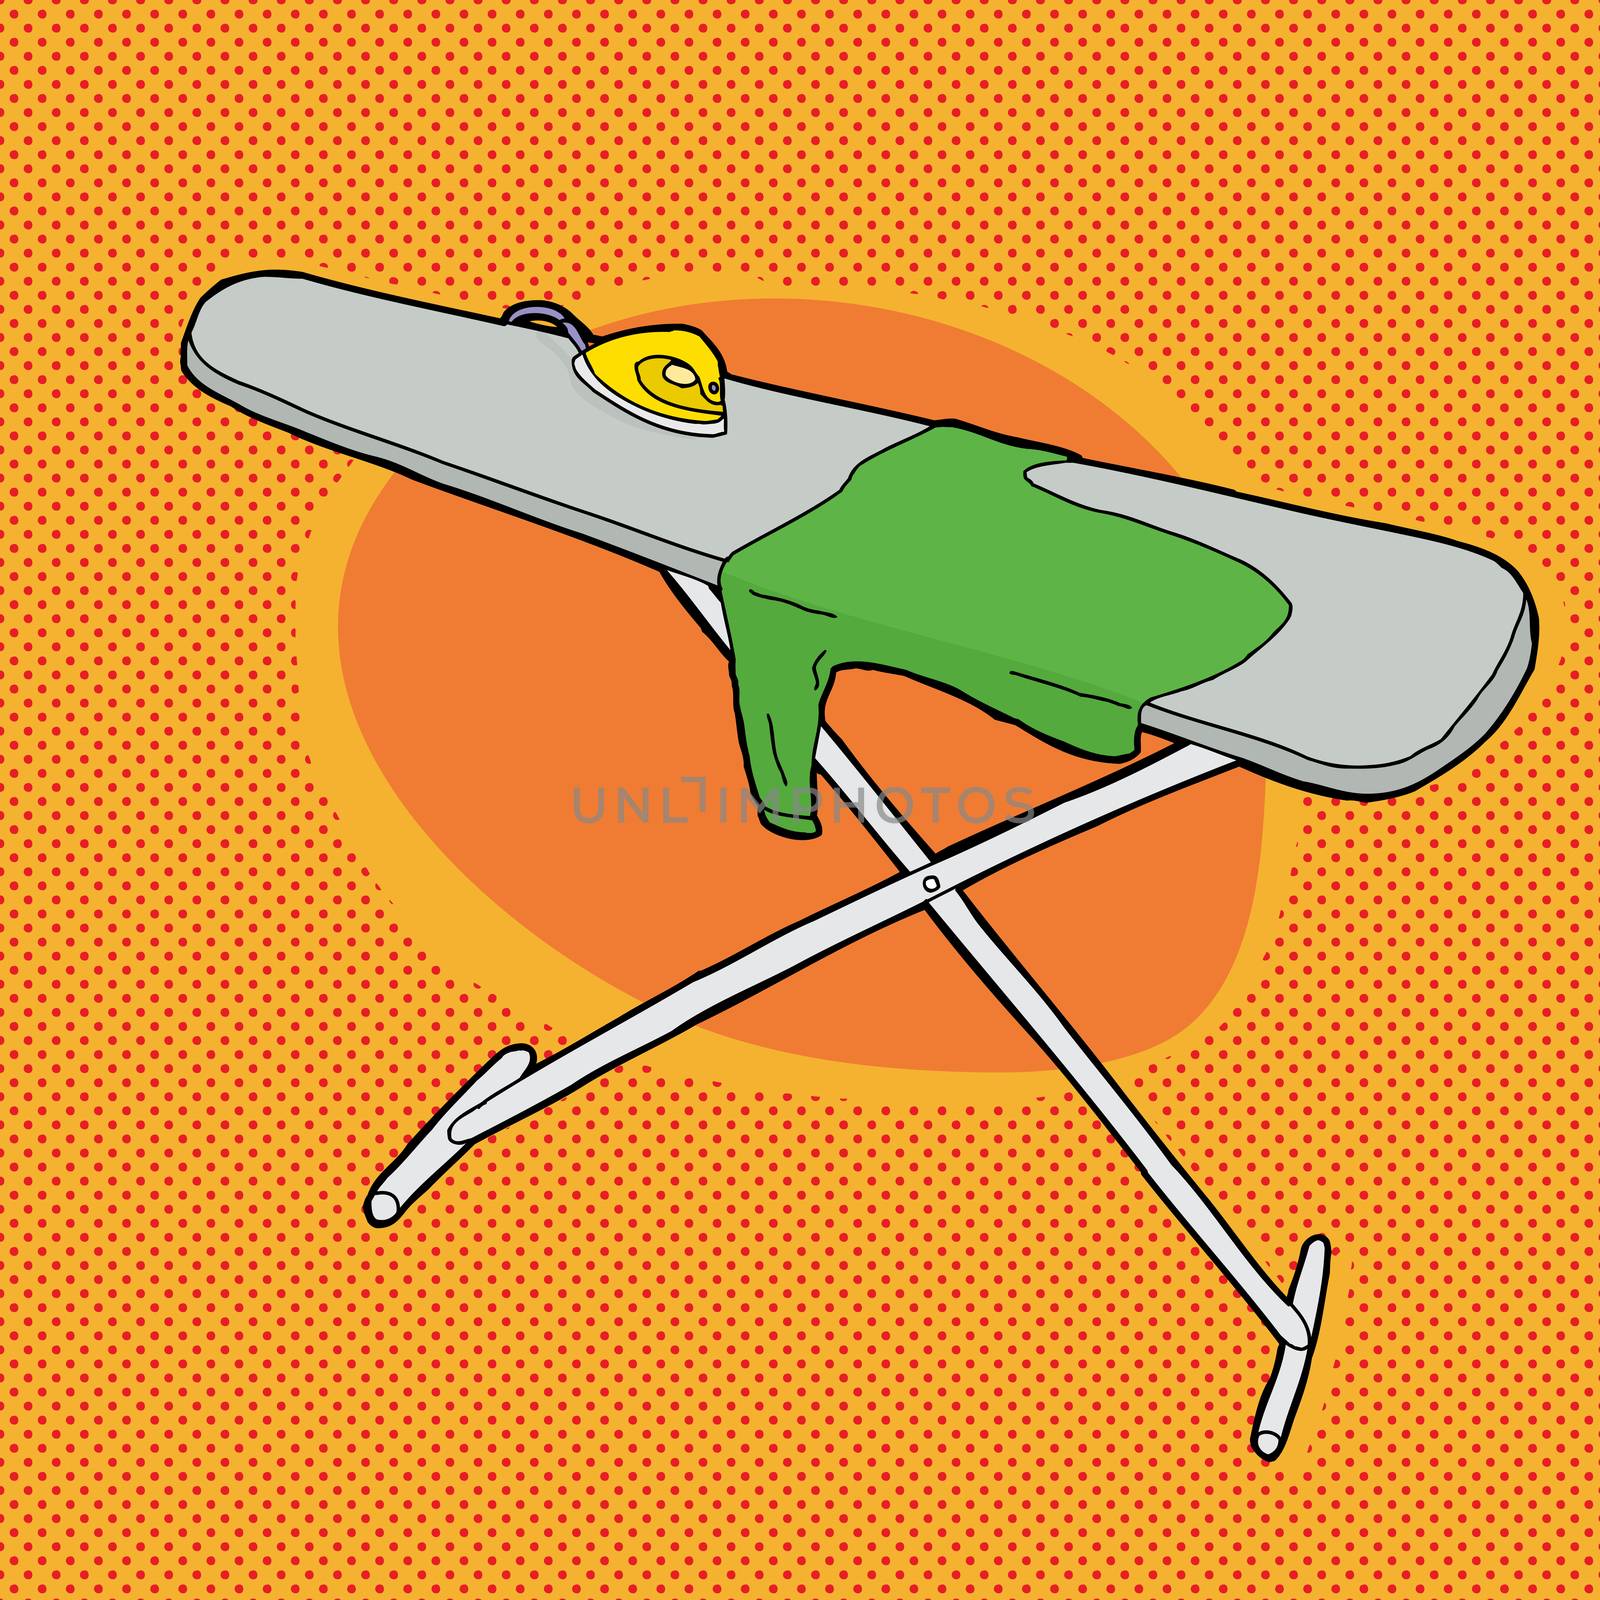 Shirt on Ironing Board by TheBlackRhino